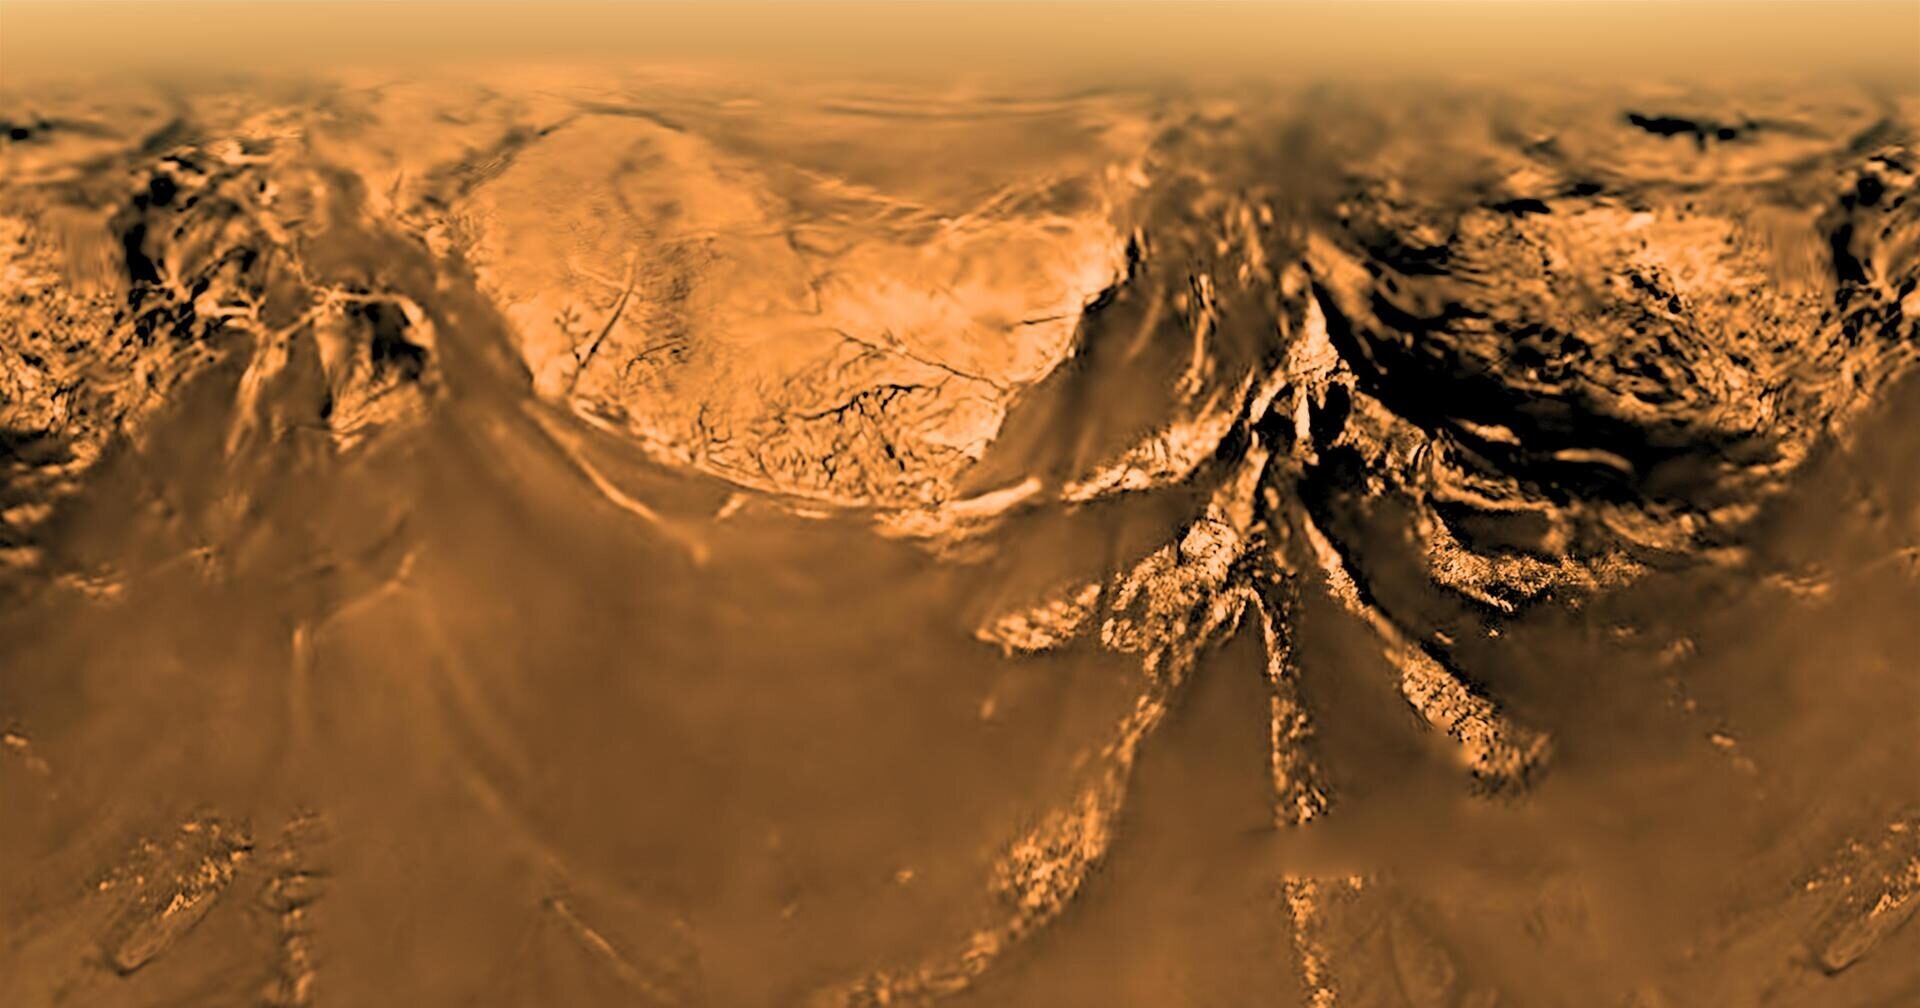 Saturn’s moon Titan may be uninhabitable